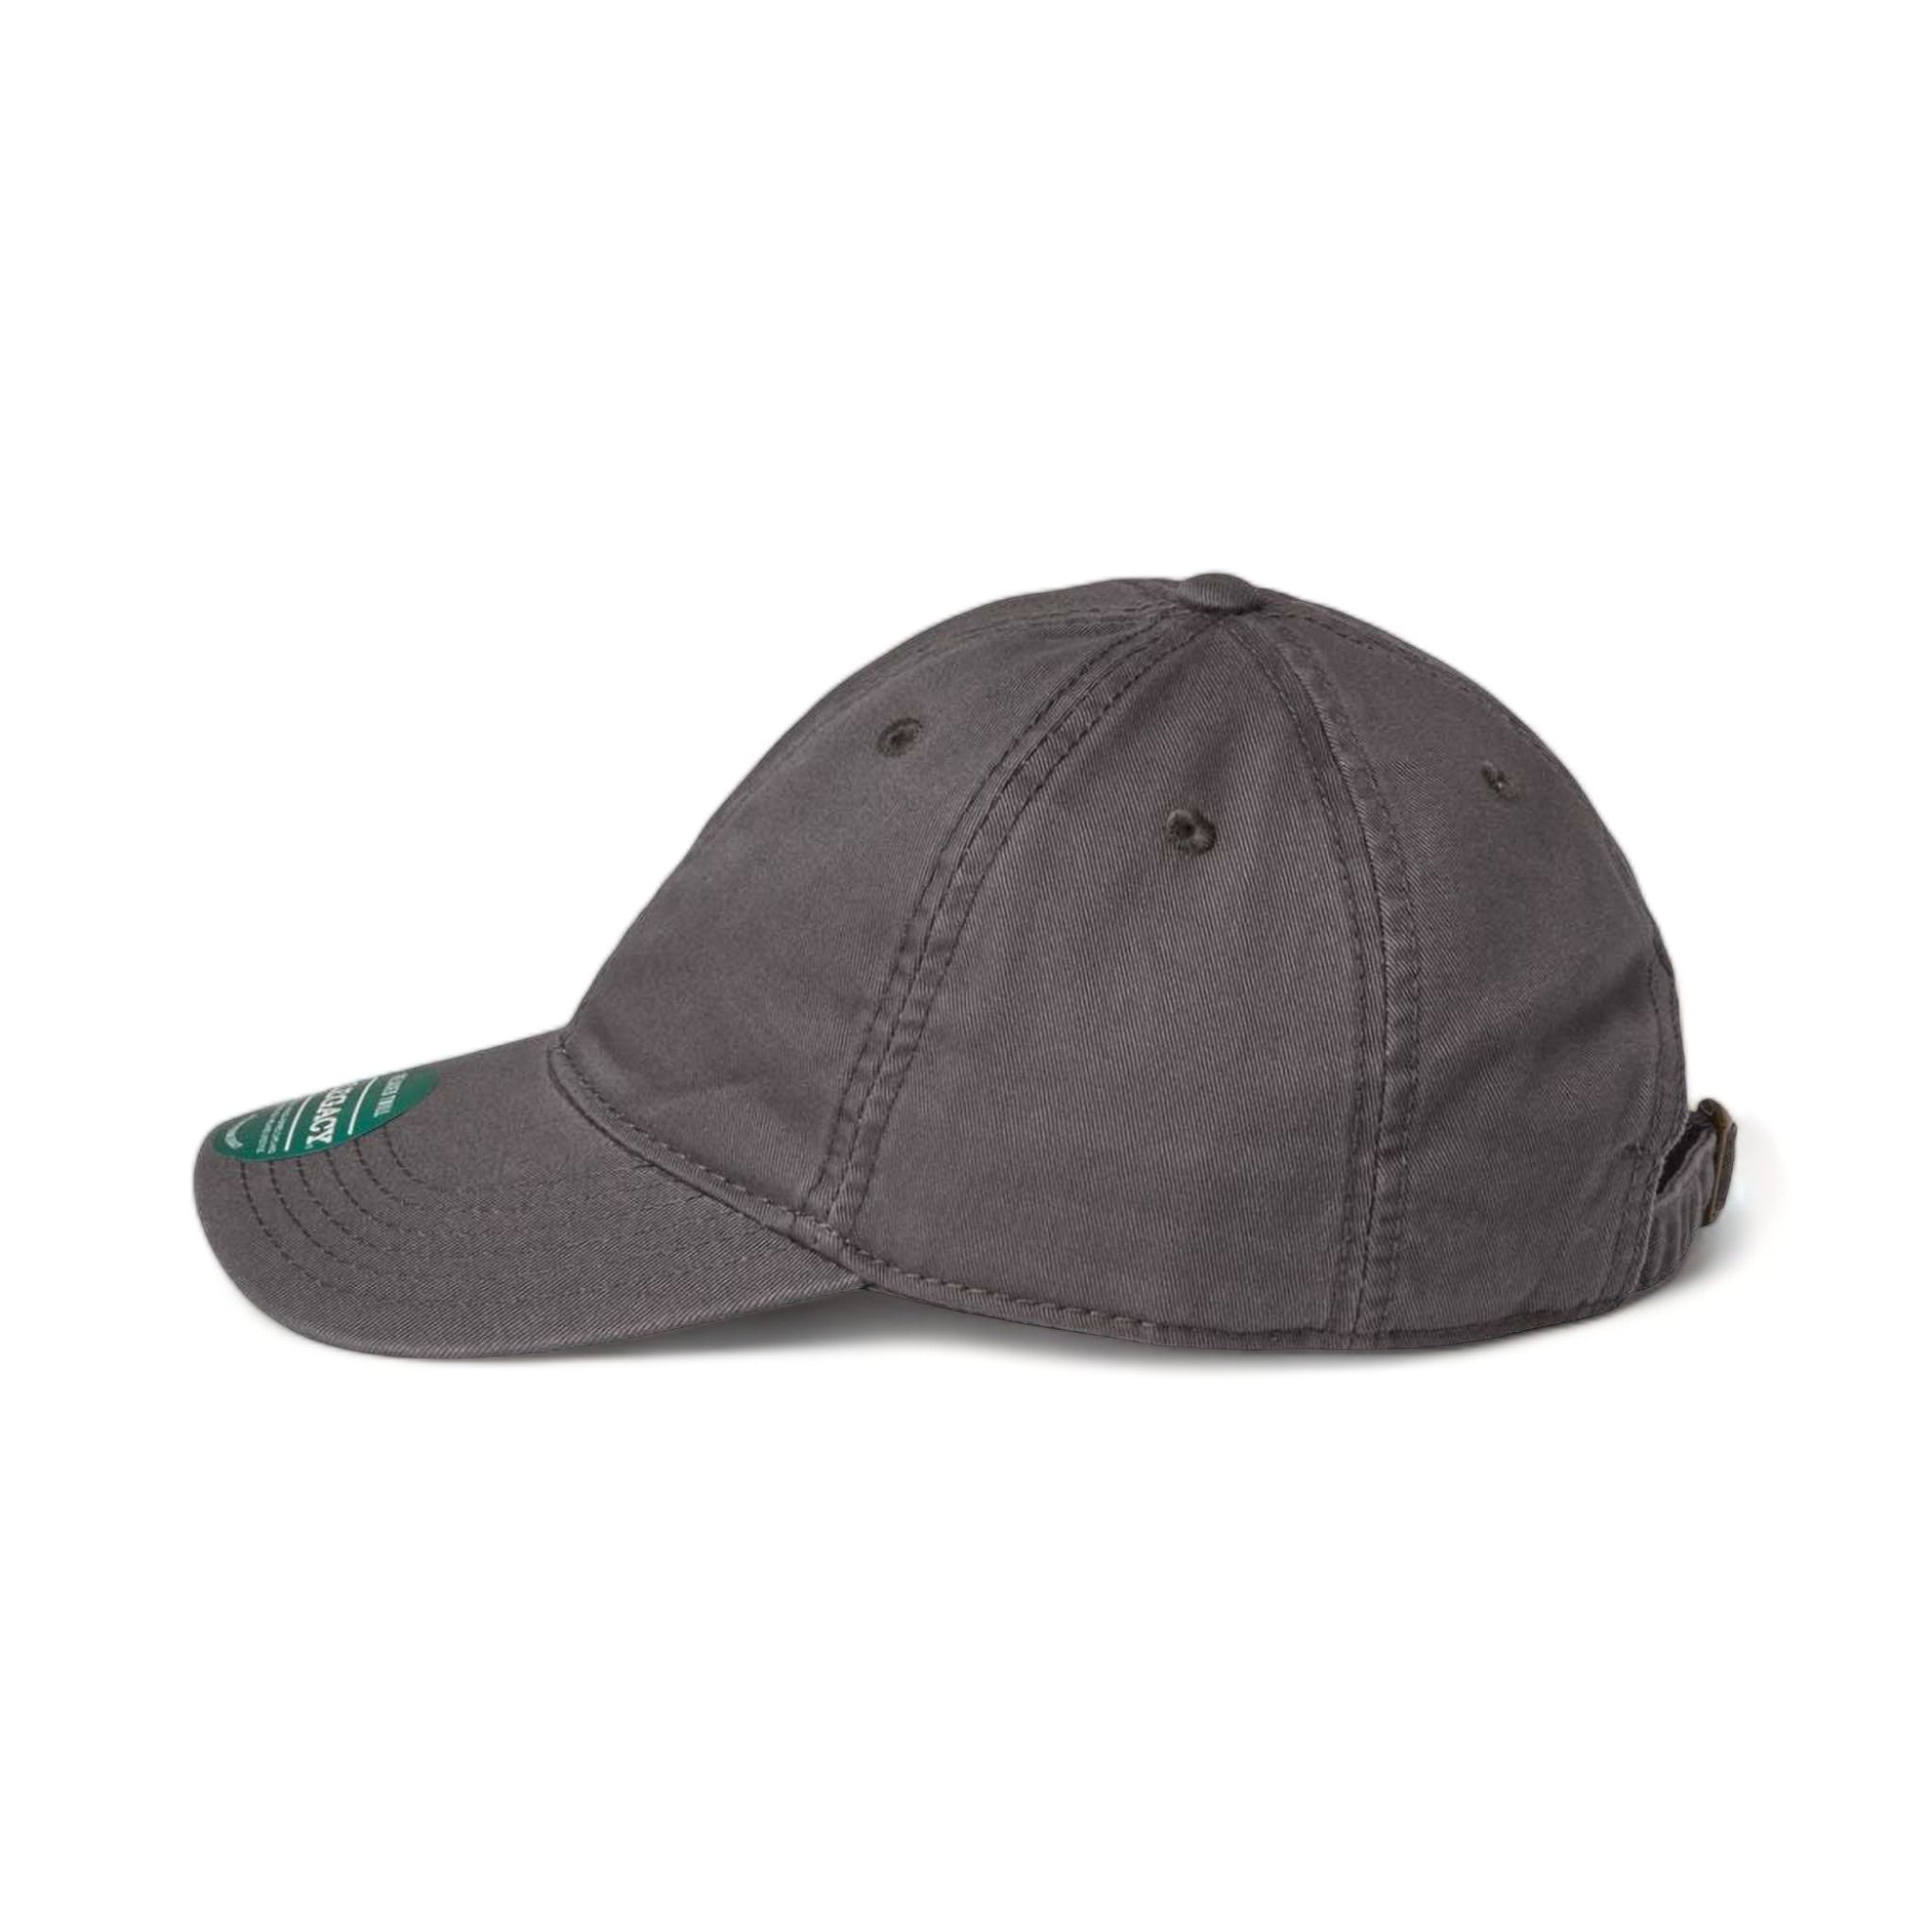 Side view of LEGACY EZA custom hat in dark grey